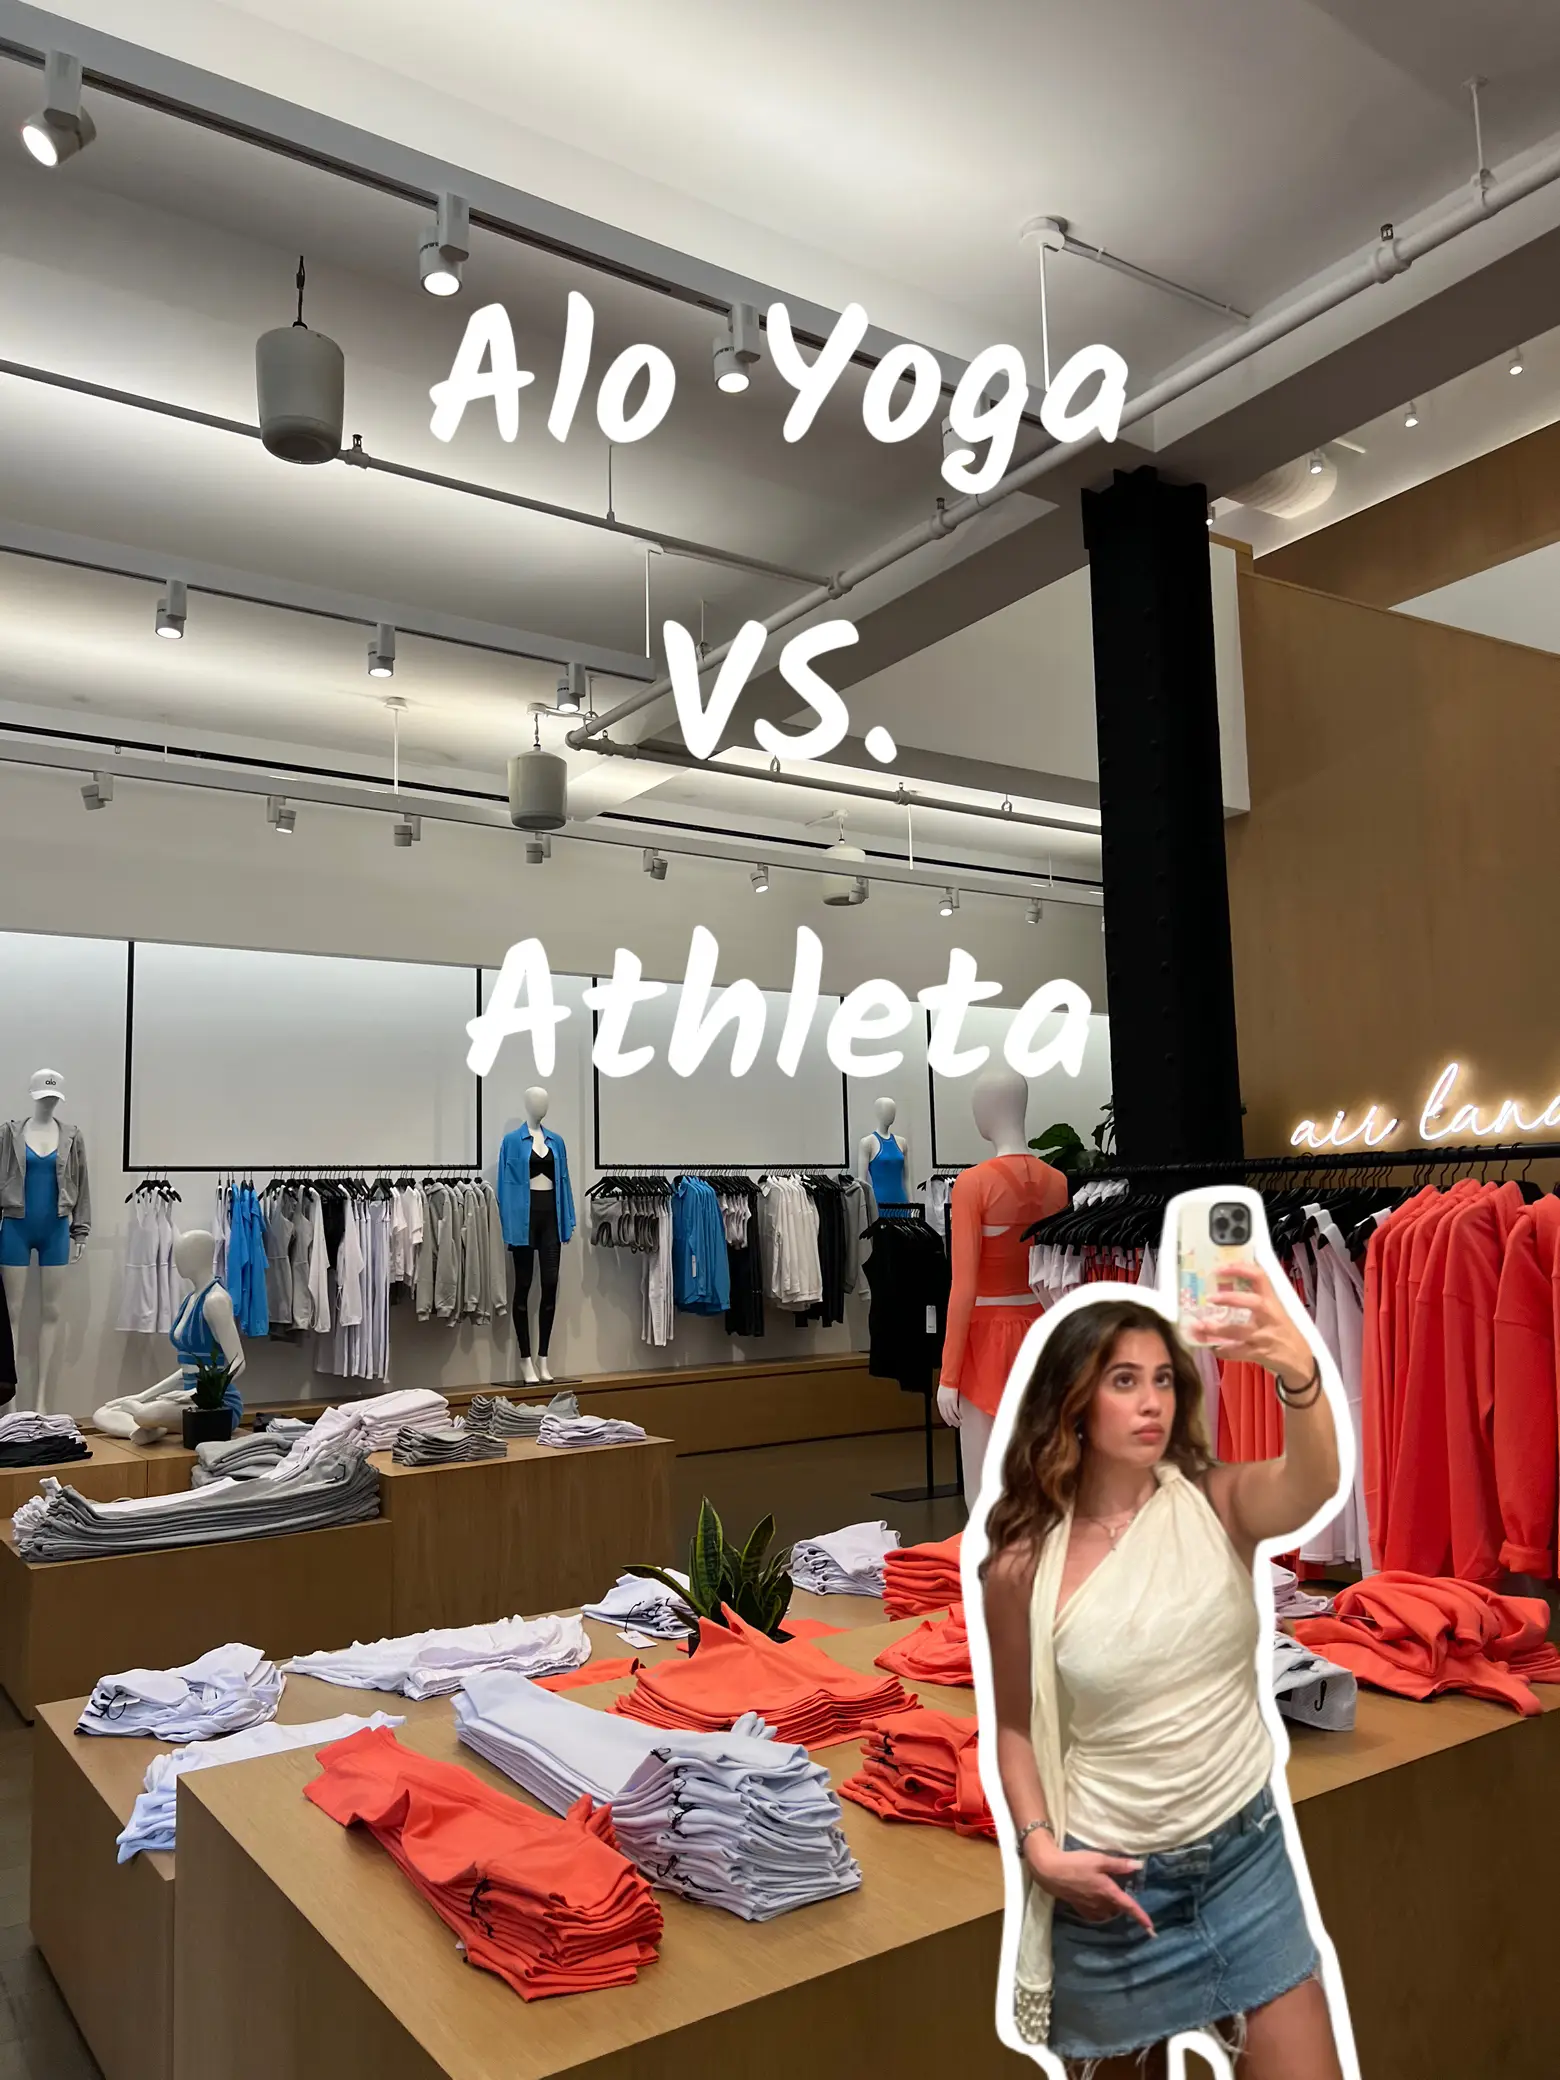 Alo Yoga VS. Athleta, Gallery posted by Biancacristino